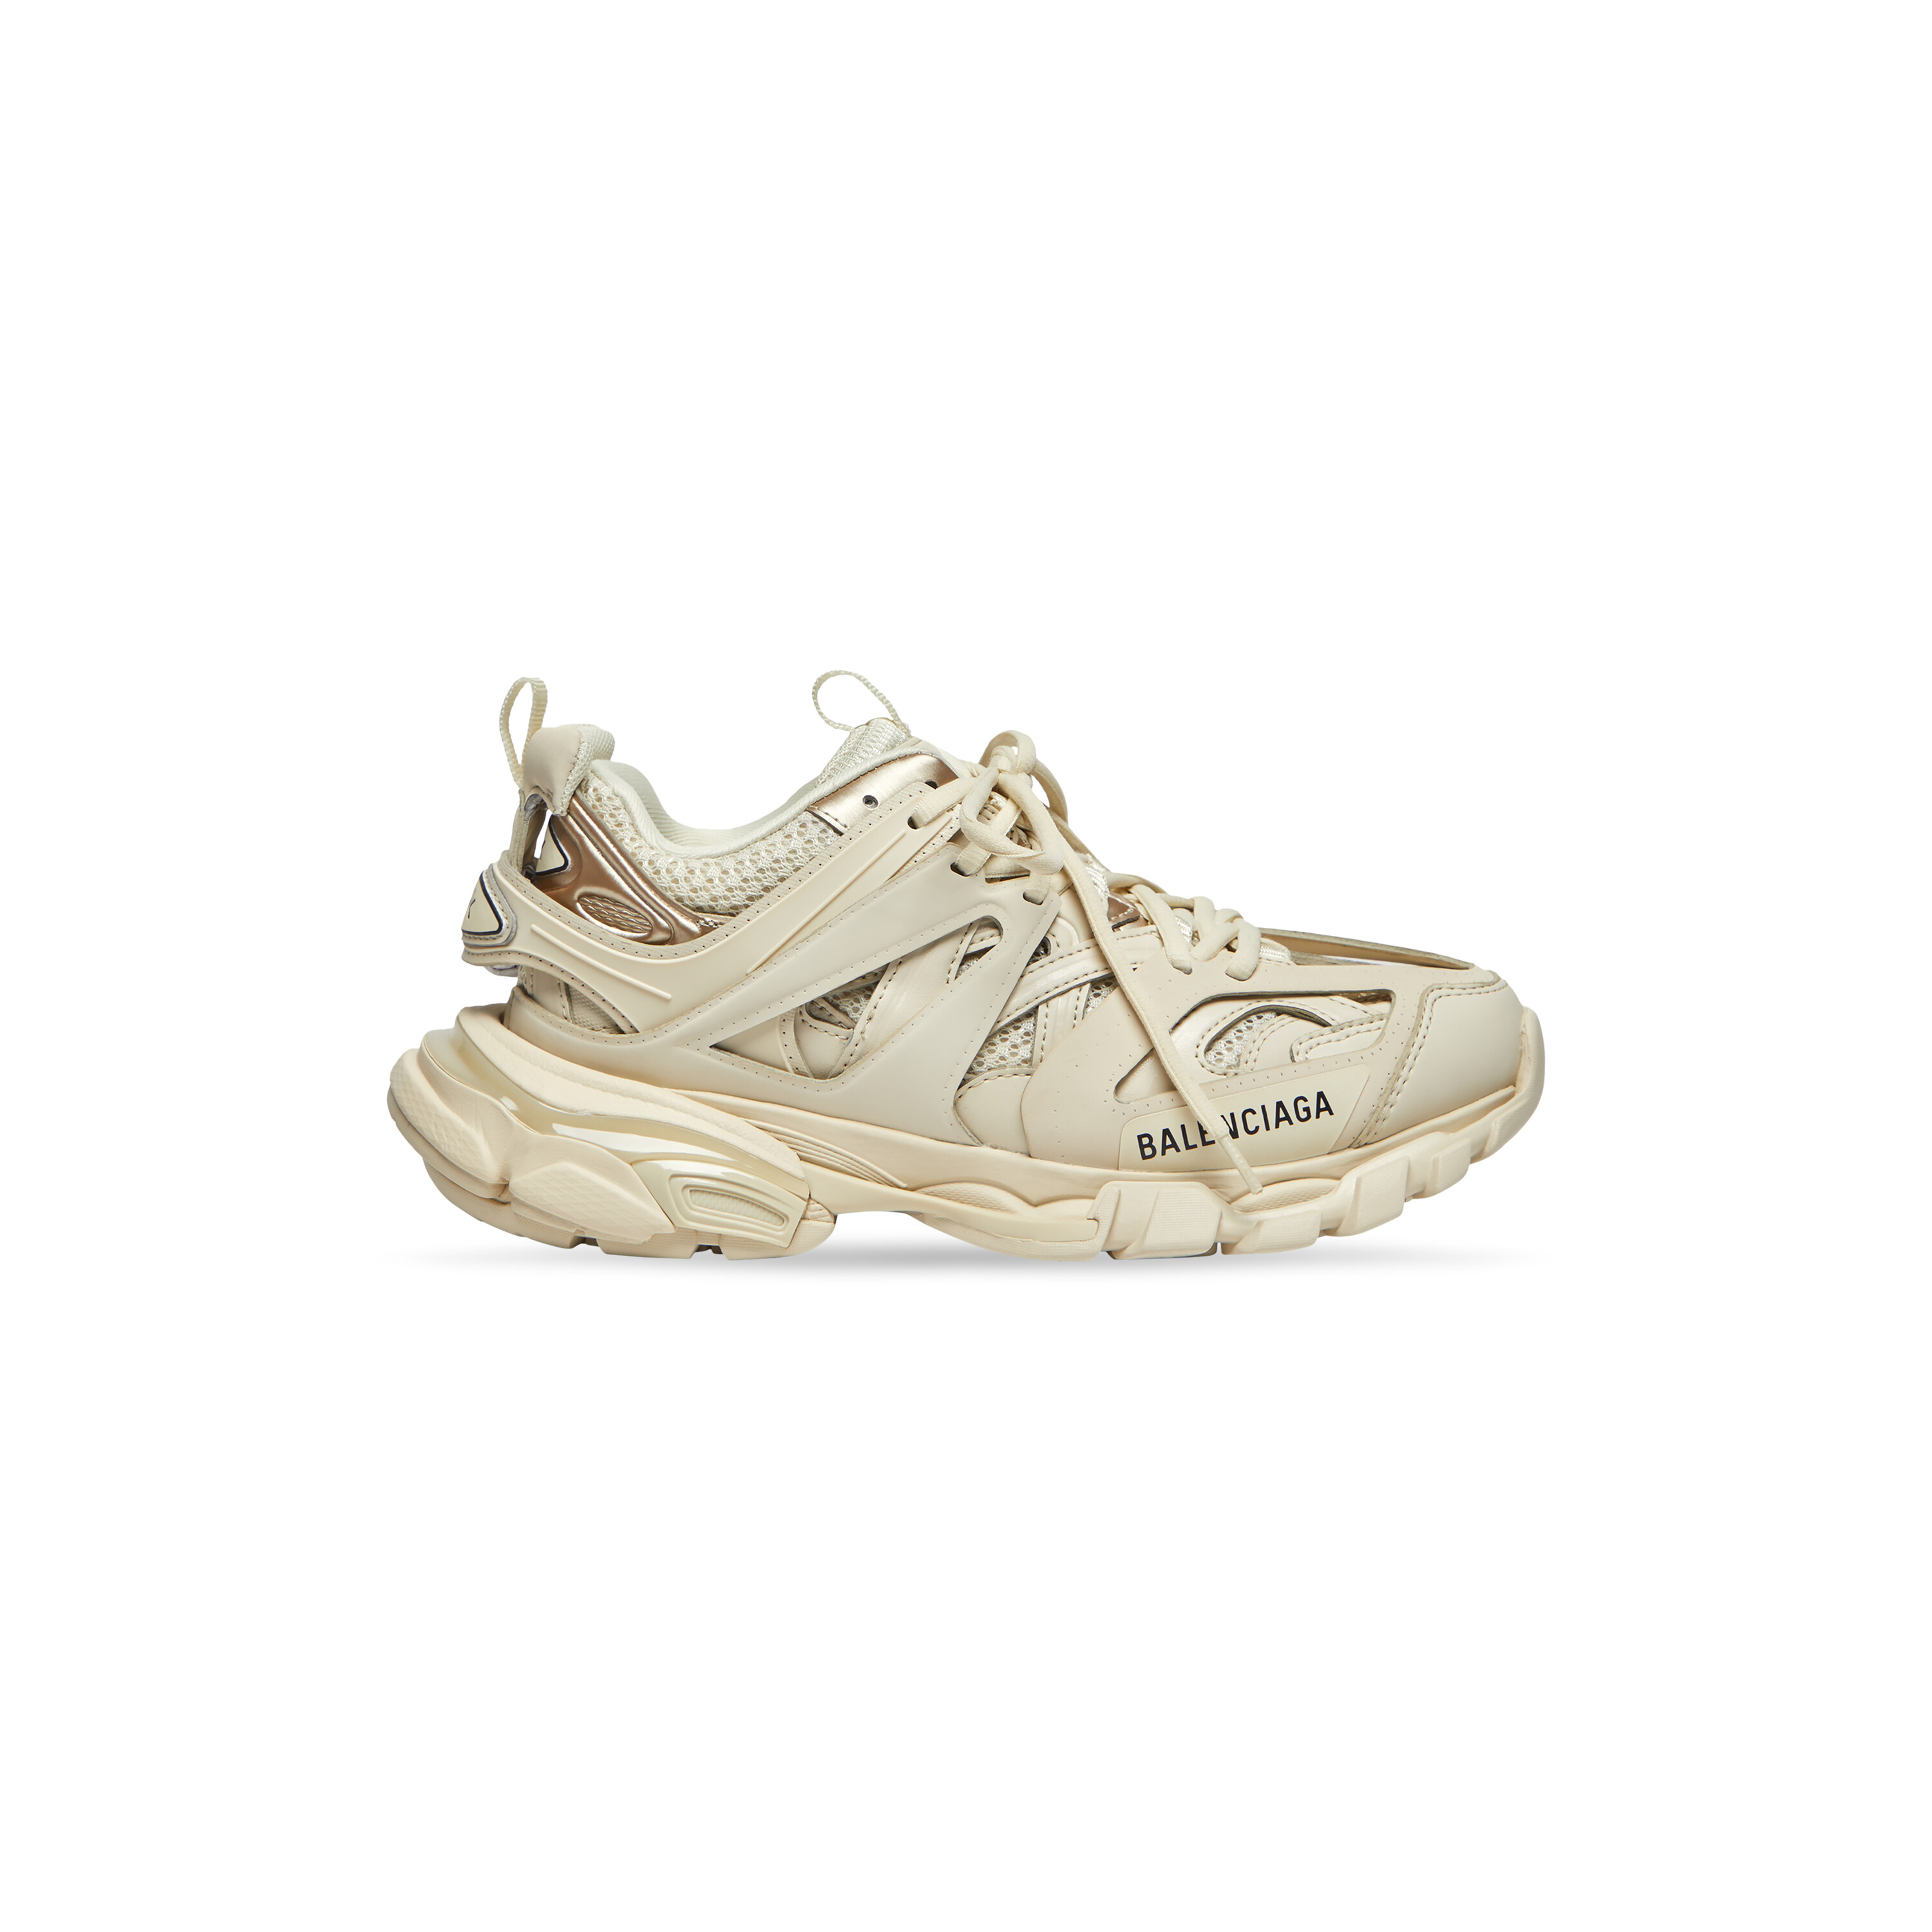 Balenciaga Track Sneakers size 41 | eBay